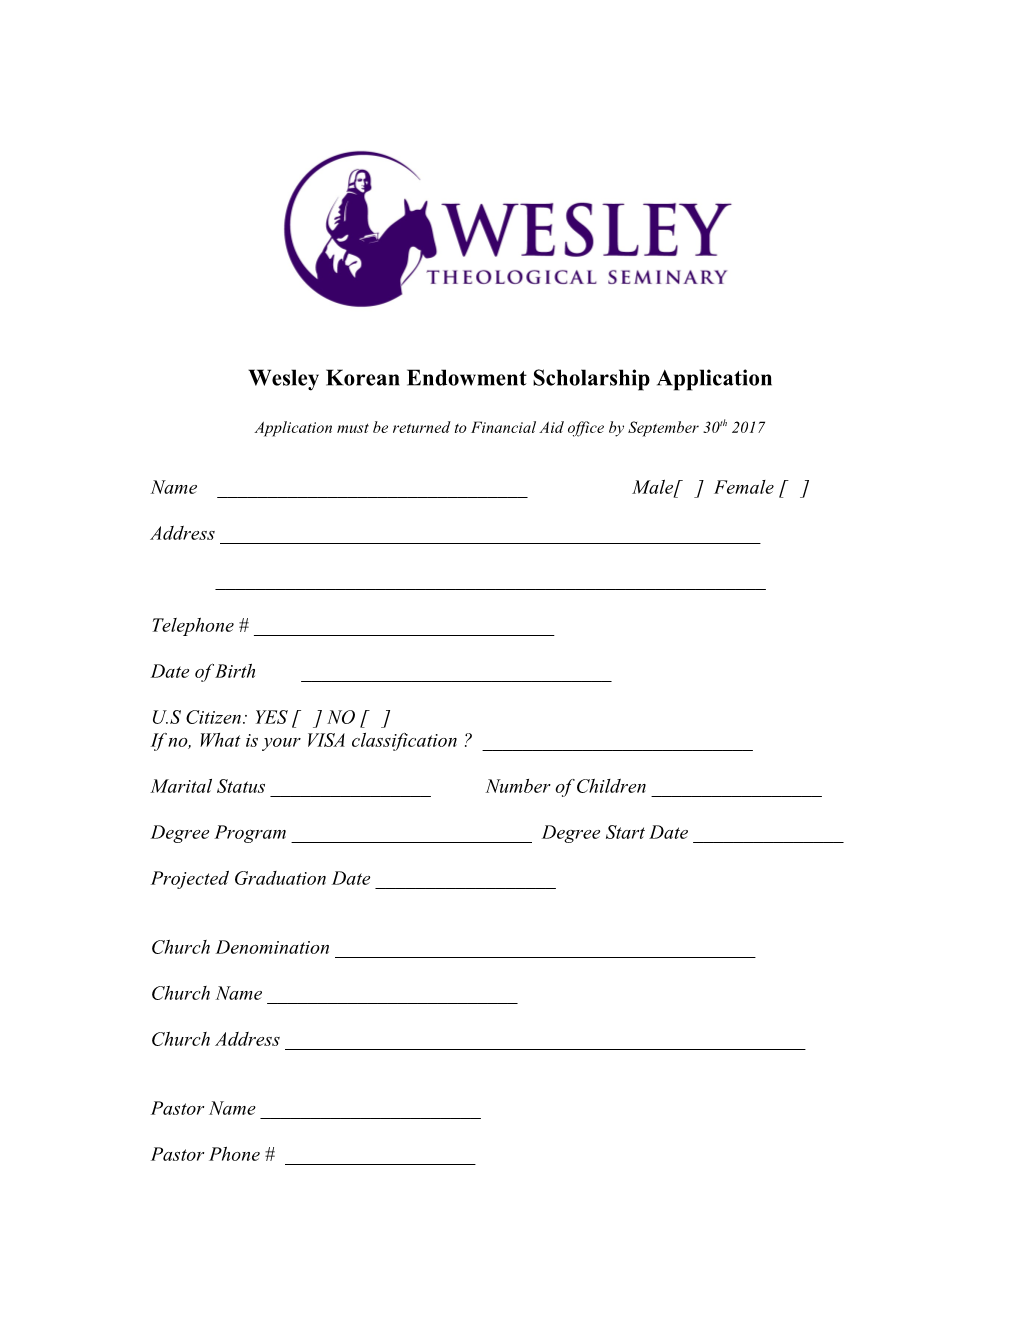 Wesley Korean Endowment Scholarship Application